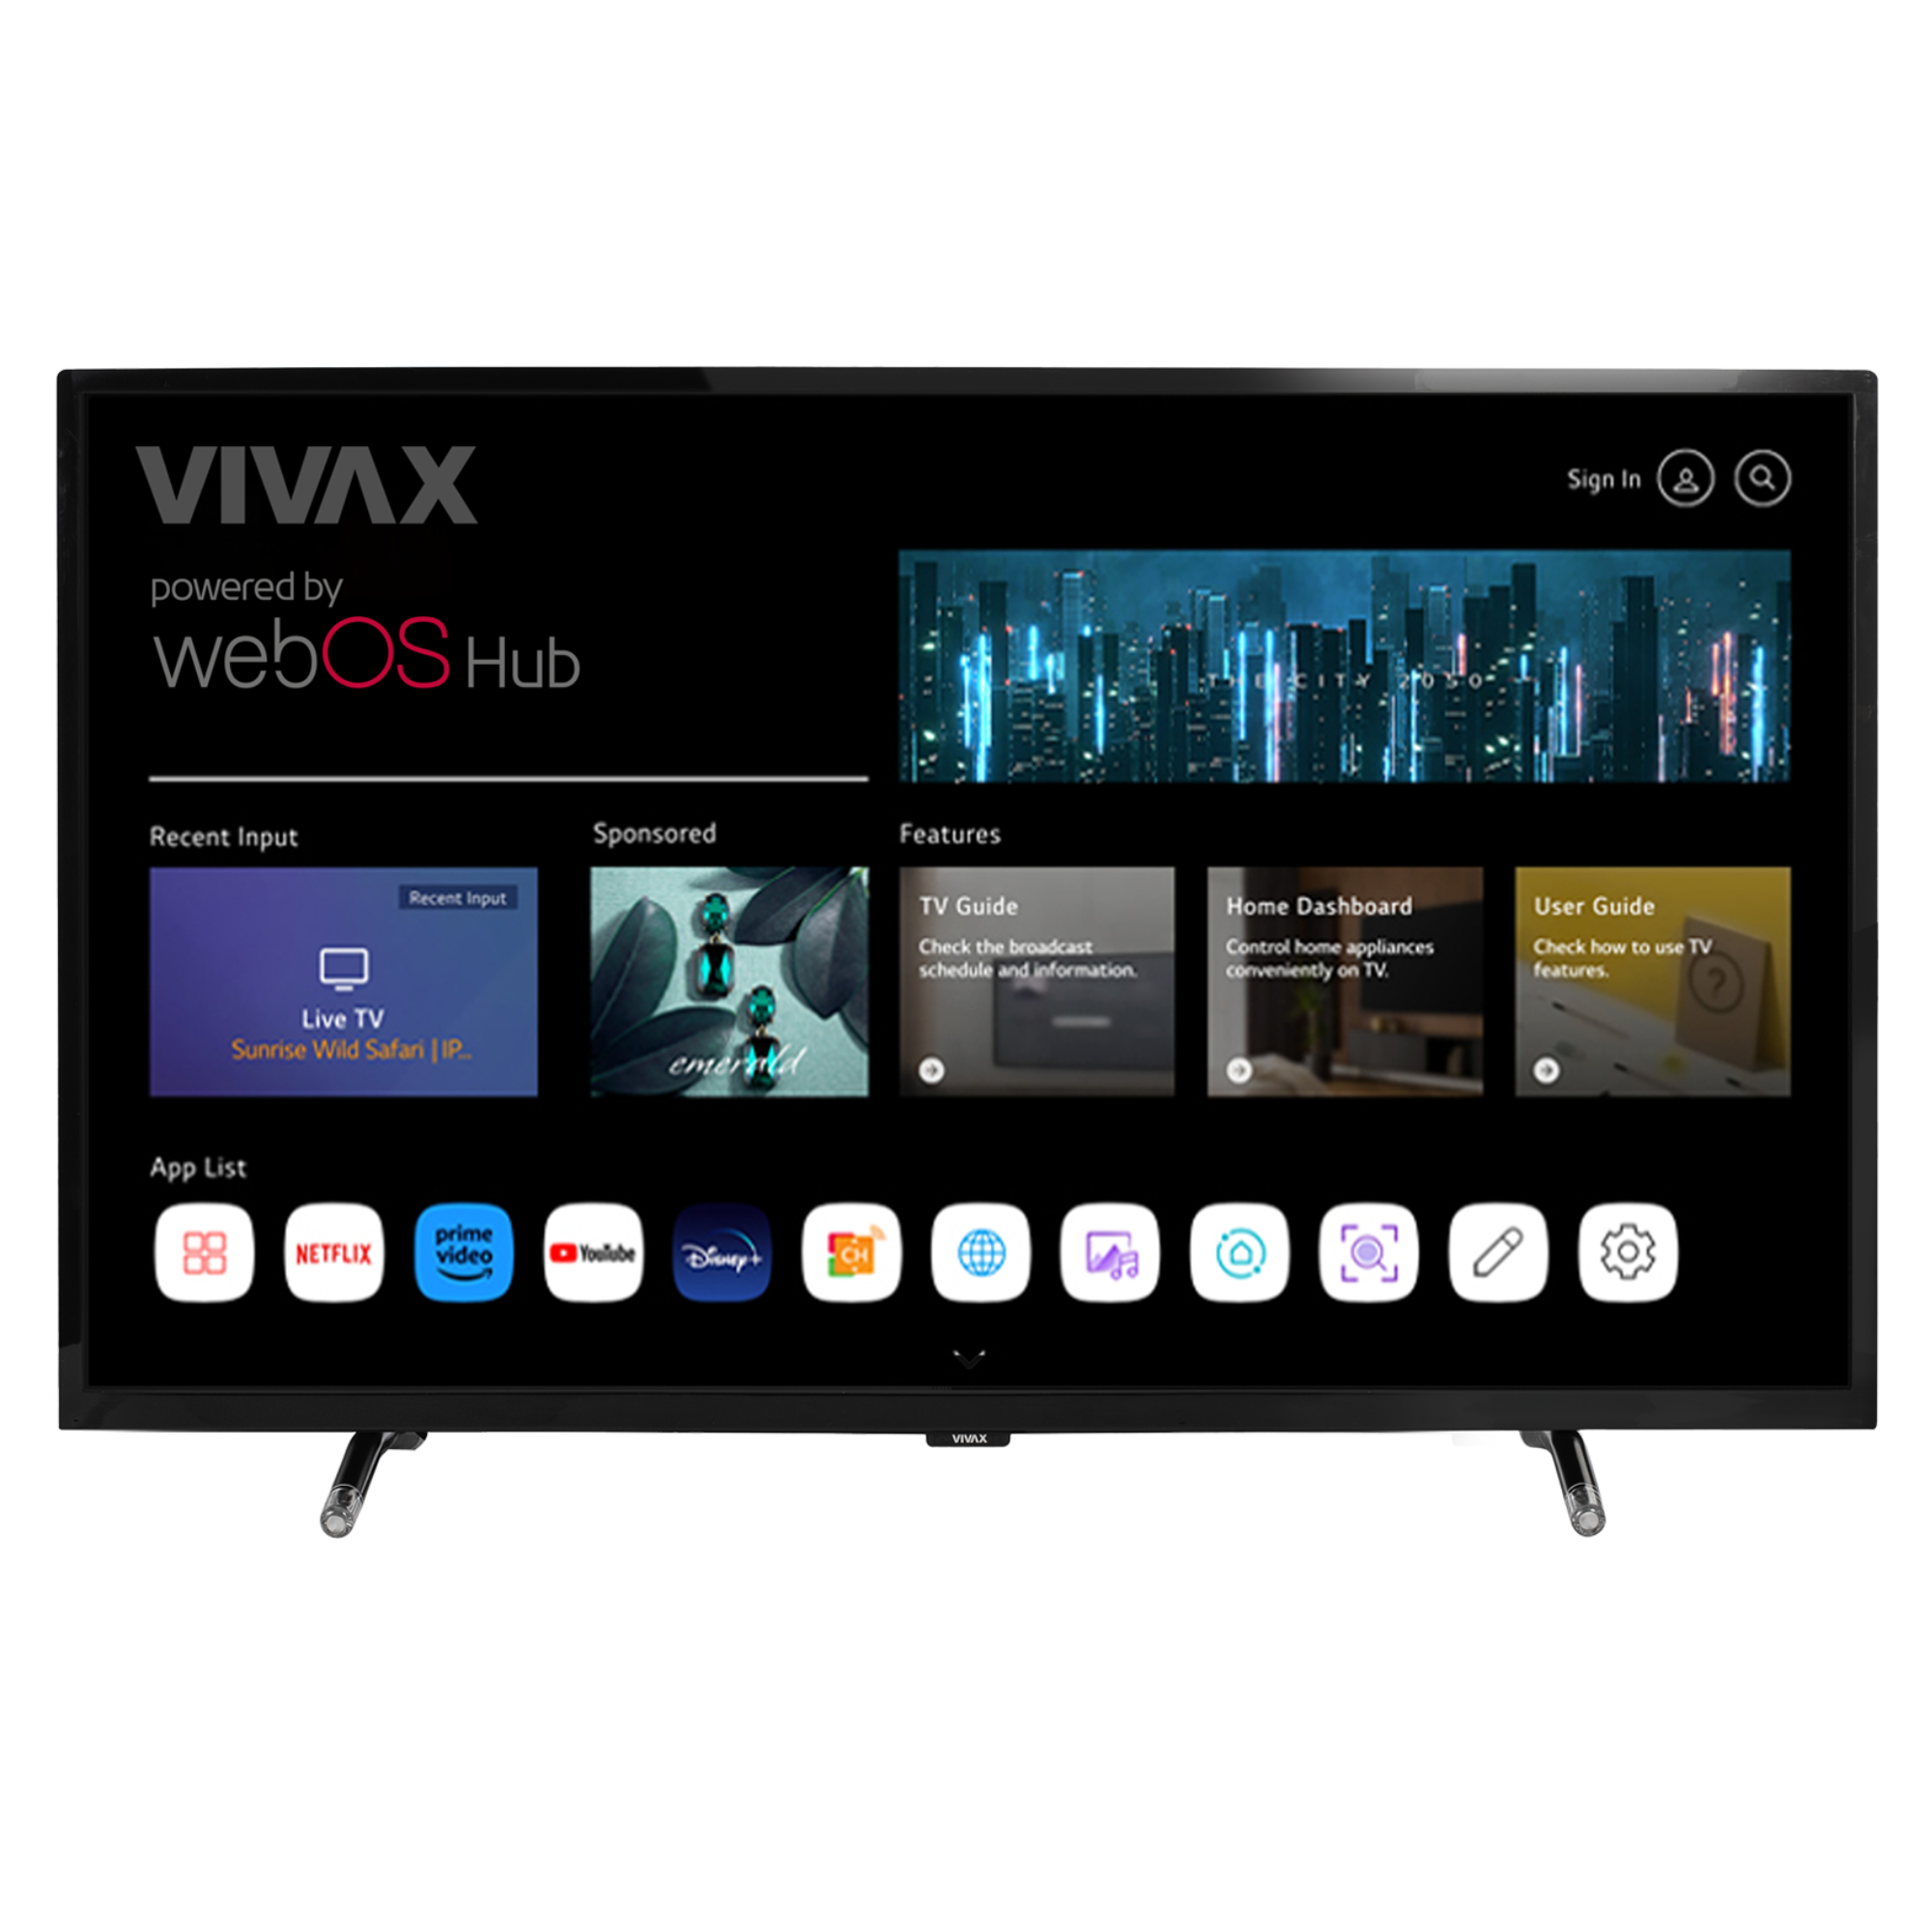 Vivax 43S60WO LED Smart TV sa dijagonalom od 43", FULL HD rezolucijom od 1920 x 1080 pxi webOS Hub operativnim sistemom. Odličan odnos cena i kvaliteta.